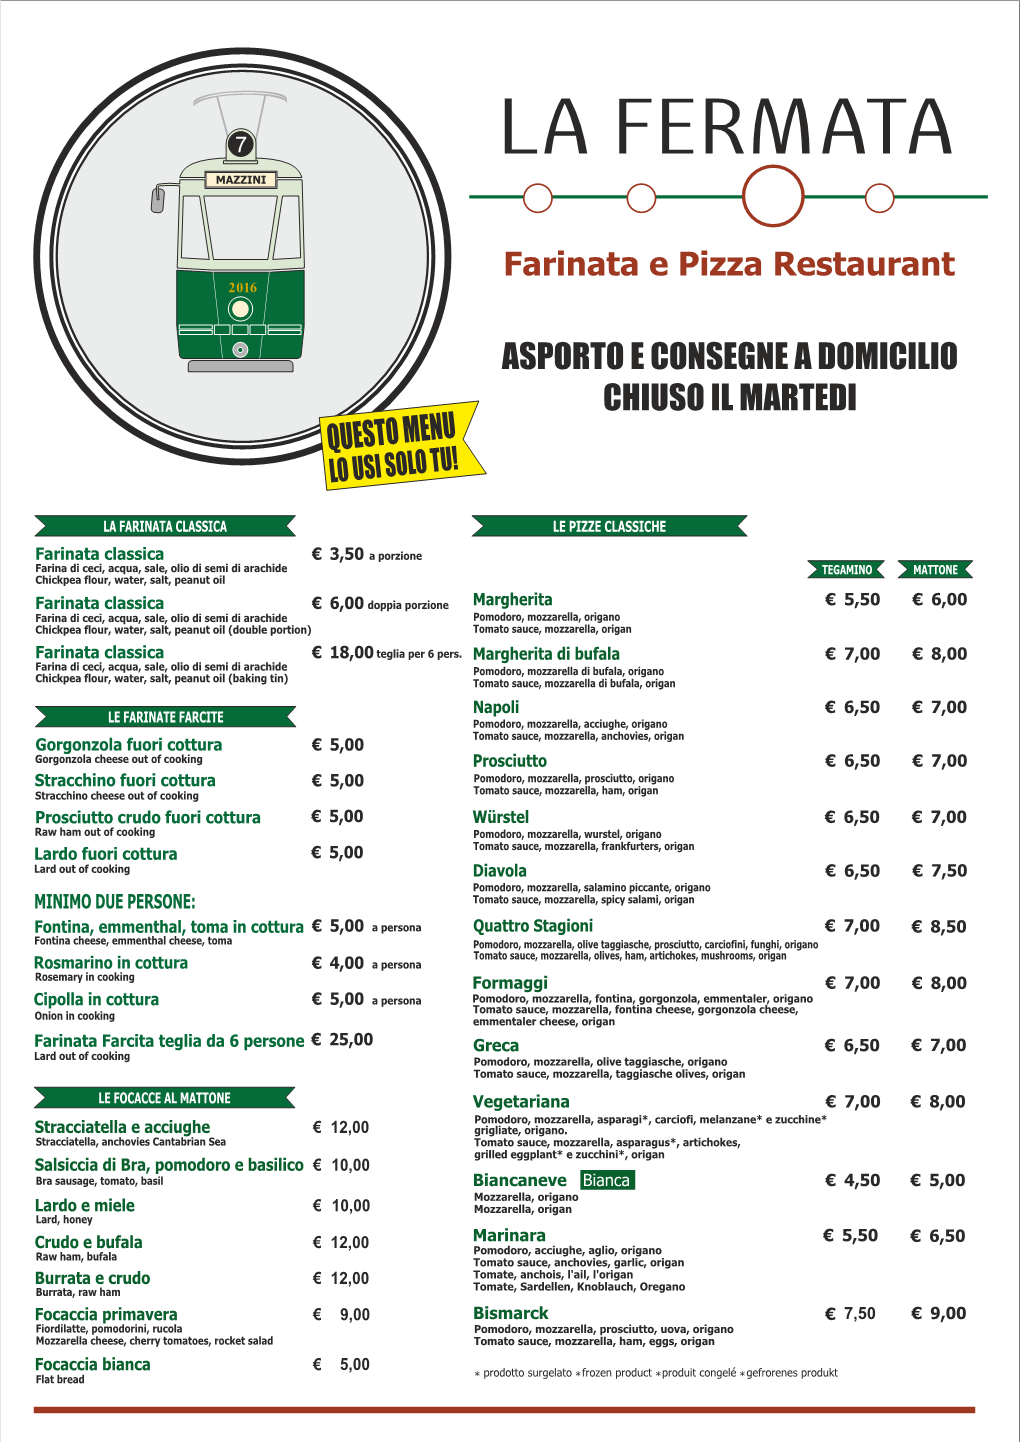 Farinata E Pizza Restaurant 2016